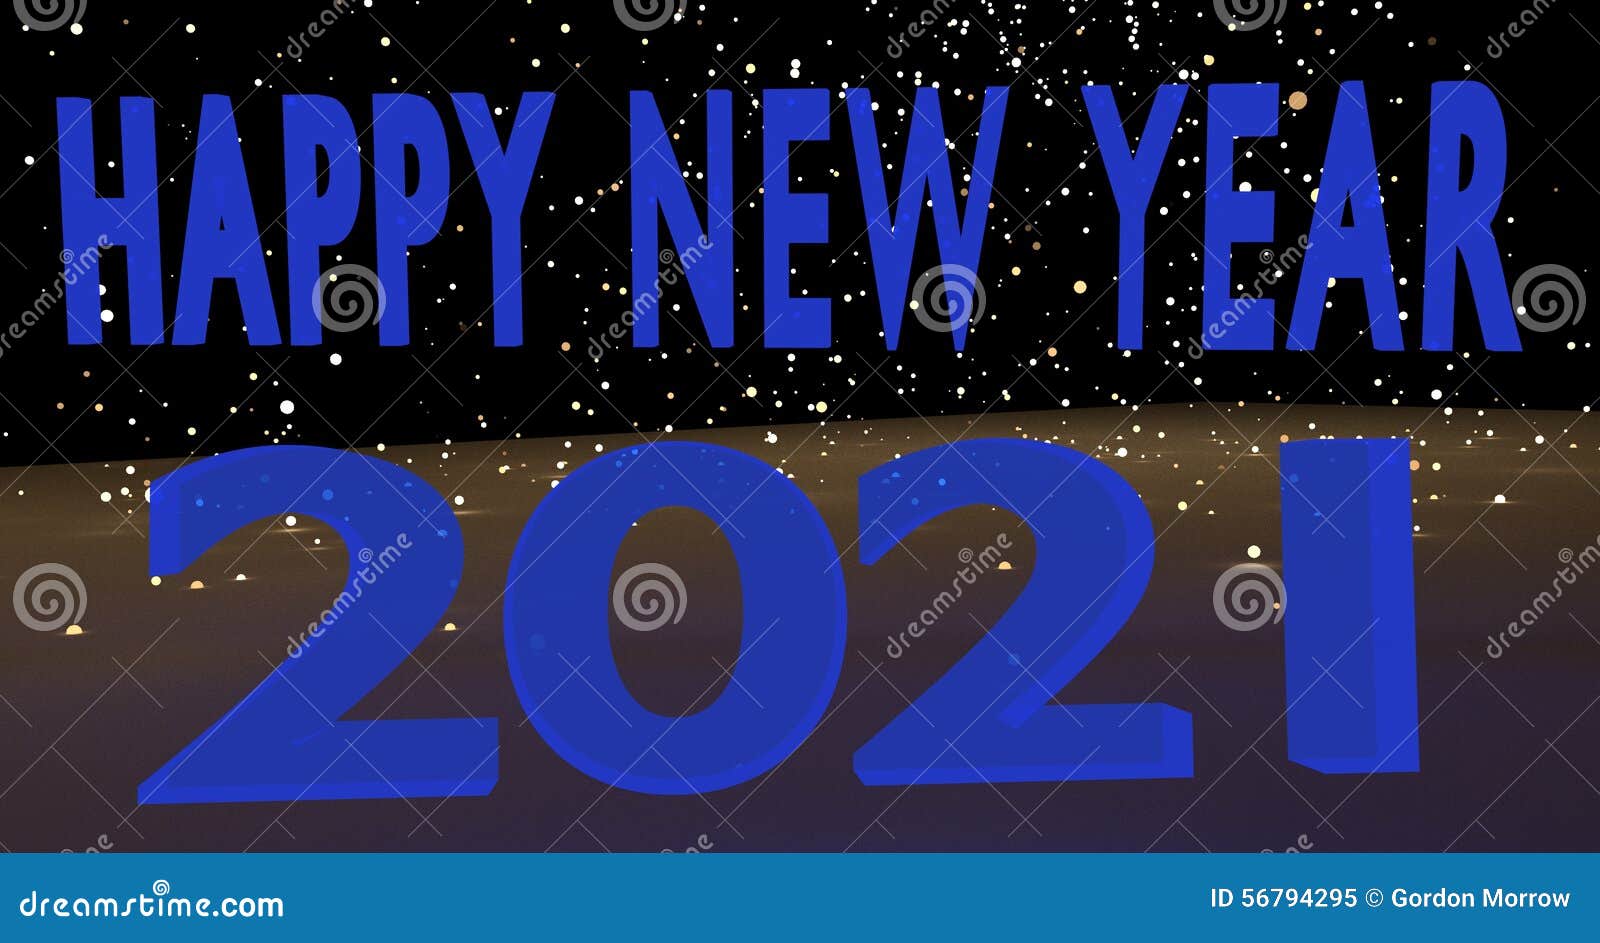 Happy New Year 2021 Stock Photo - Image: 567942951300 x 783